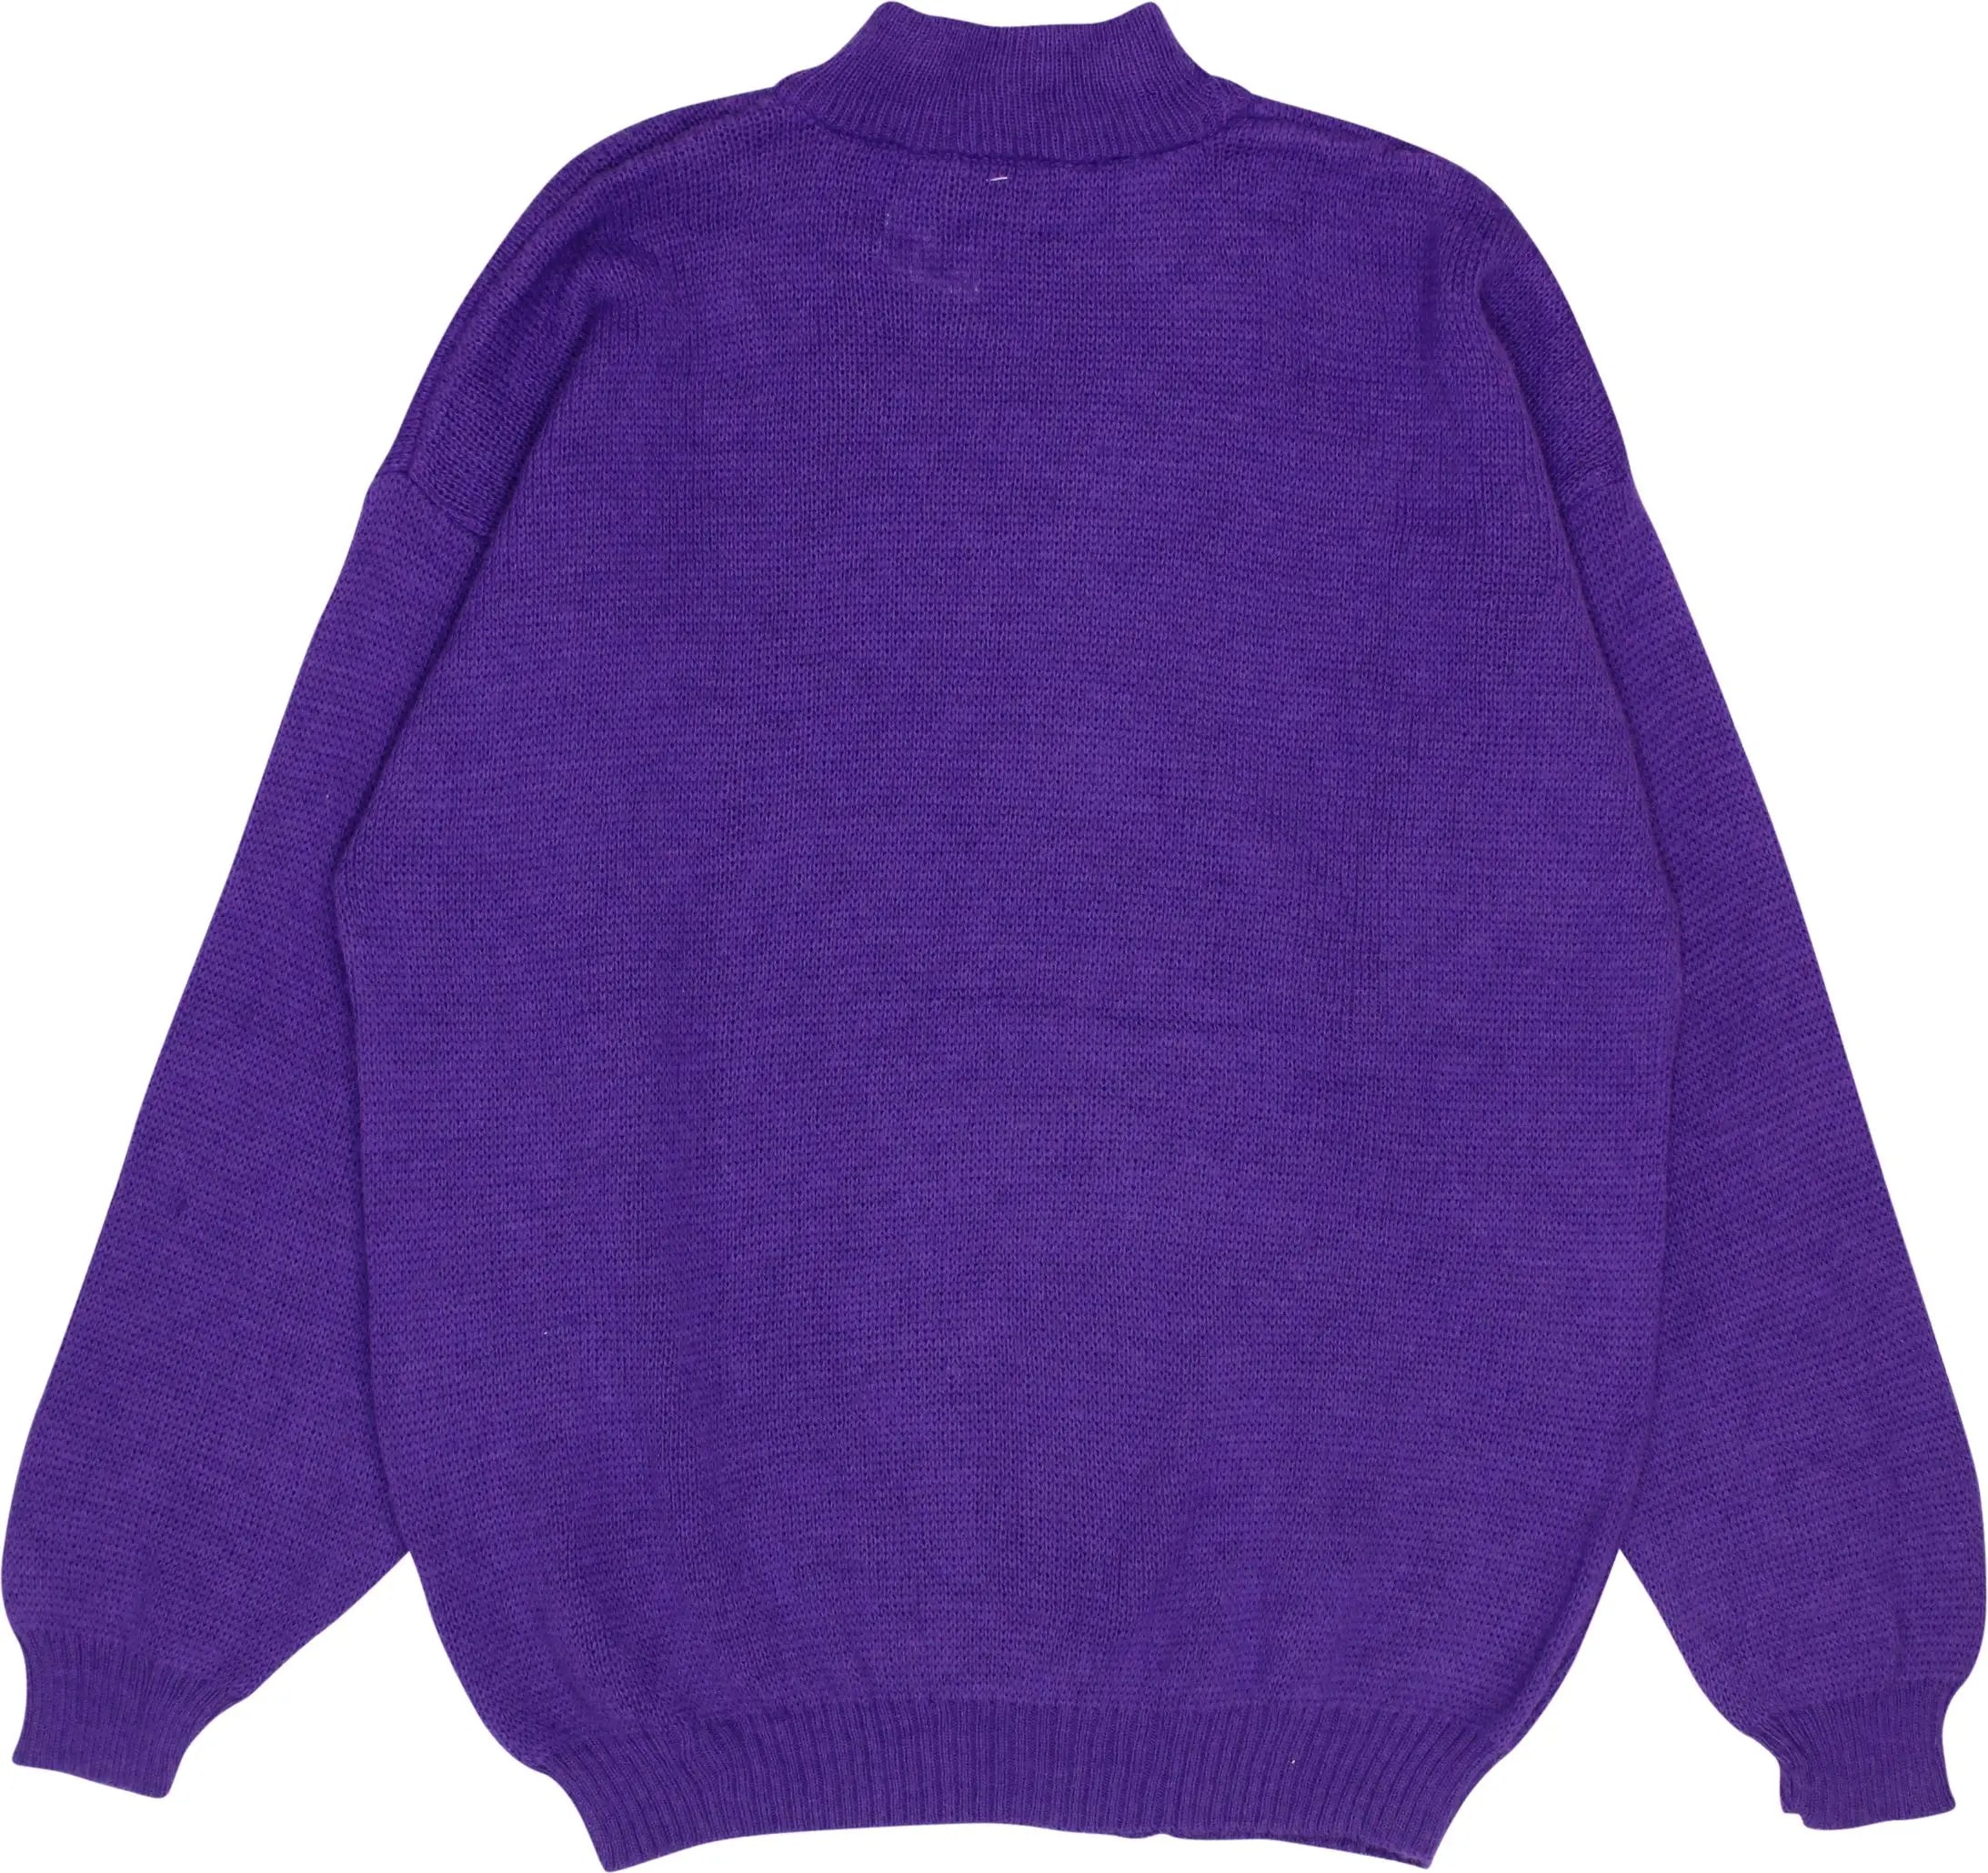 Va Piensiero - Purple Wool Blend Jumper- ThriftTale.com - Vintage and second handclothing